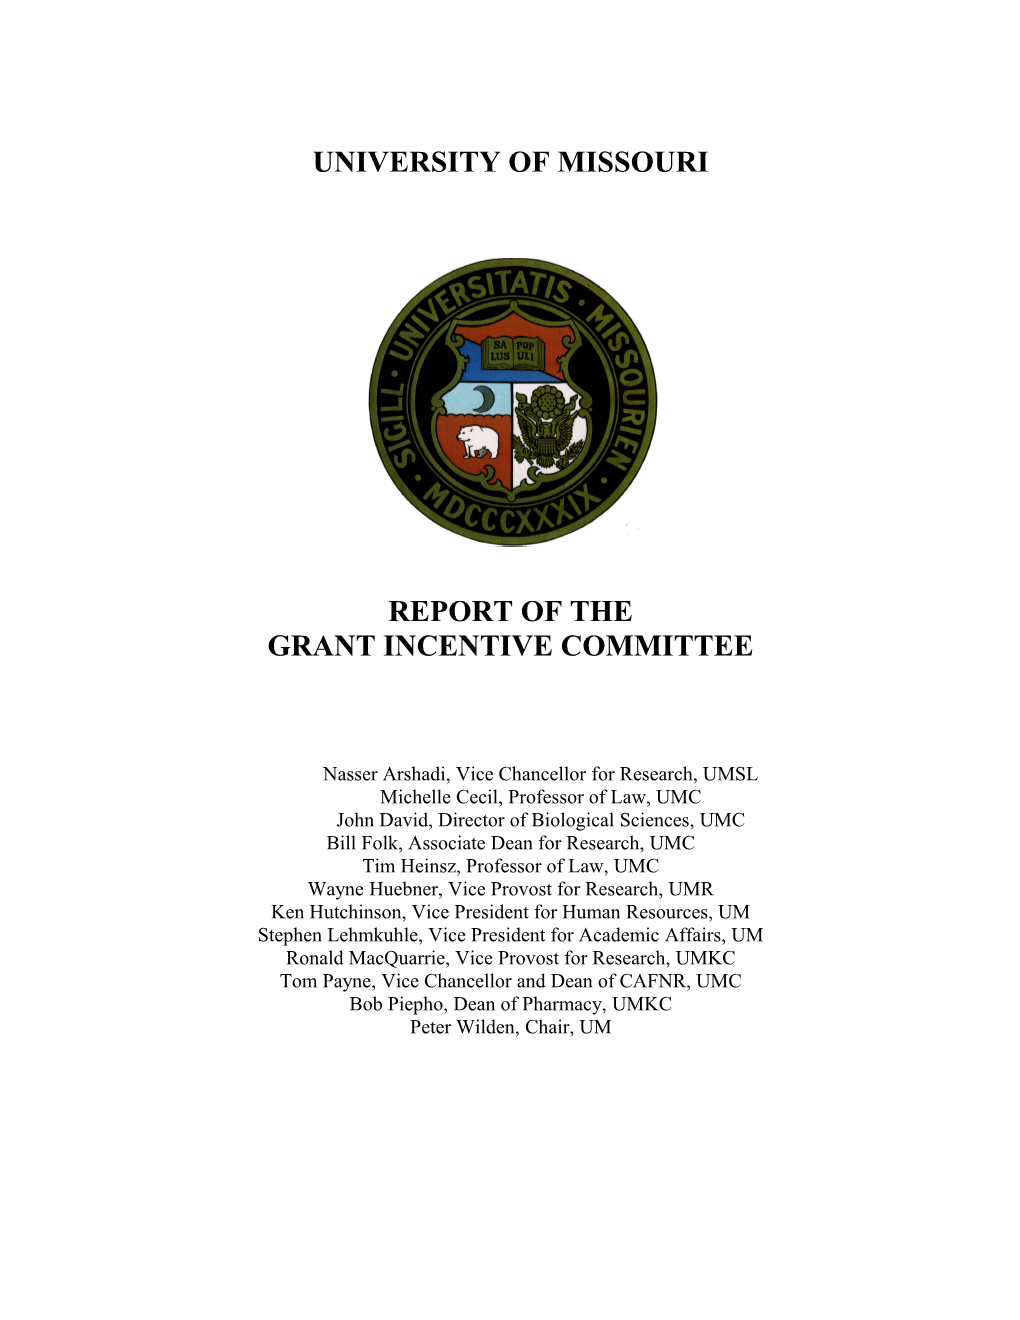 Faculty Grant Incentive Program